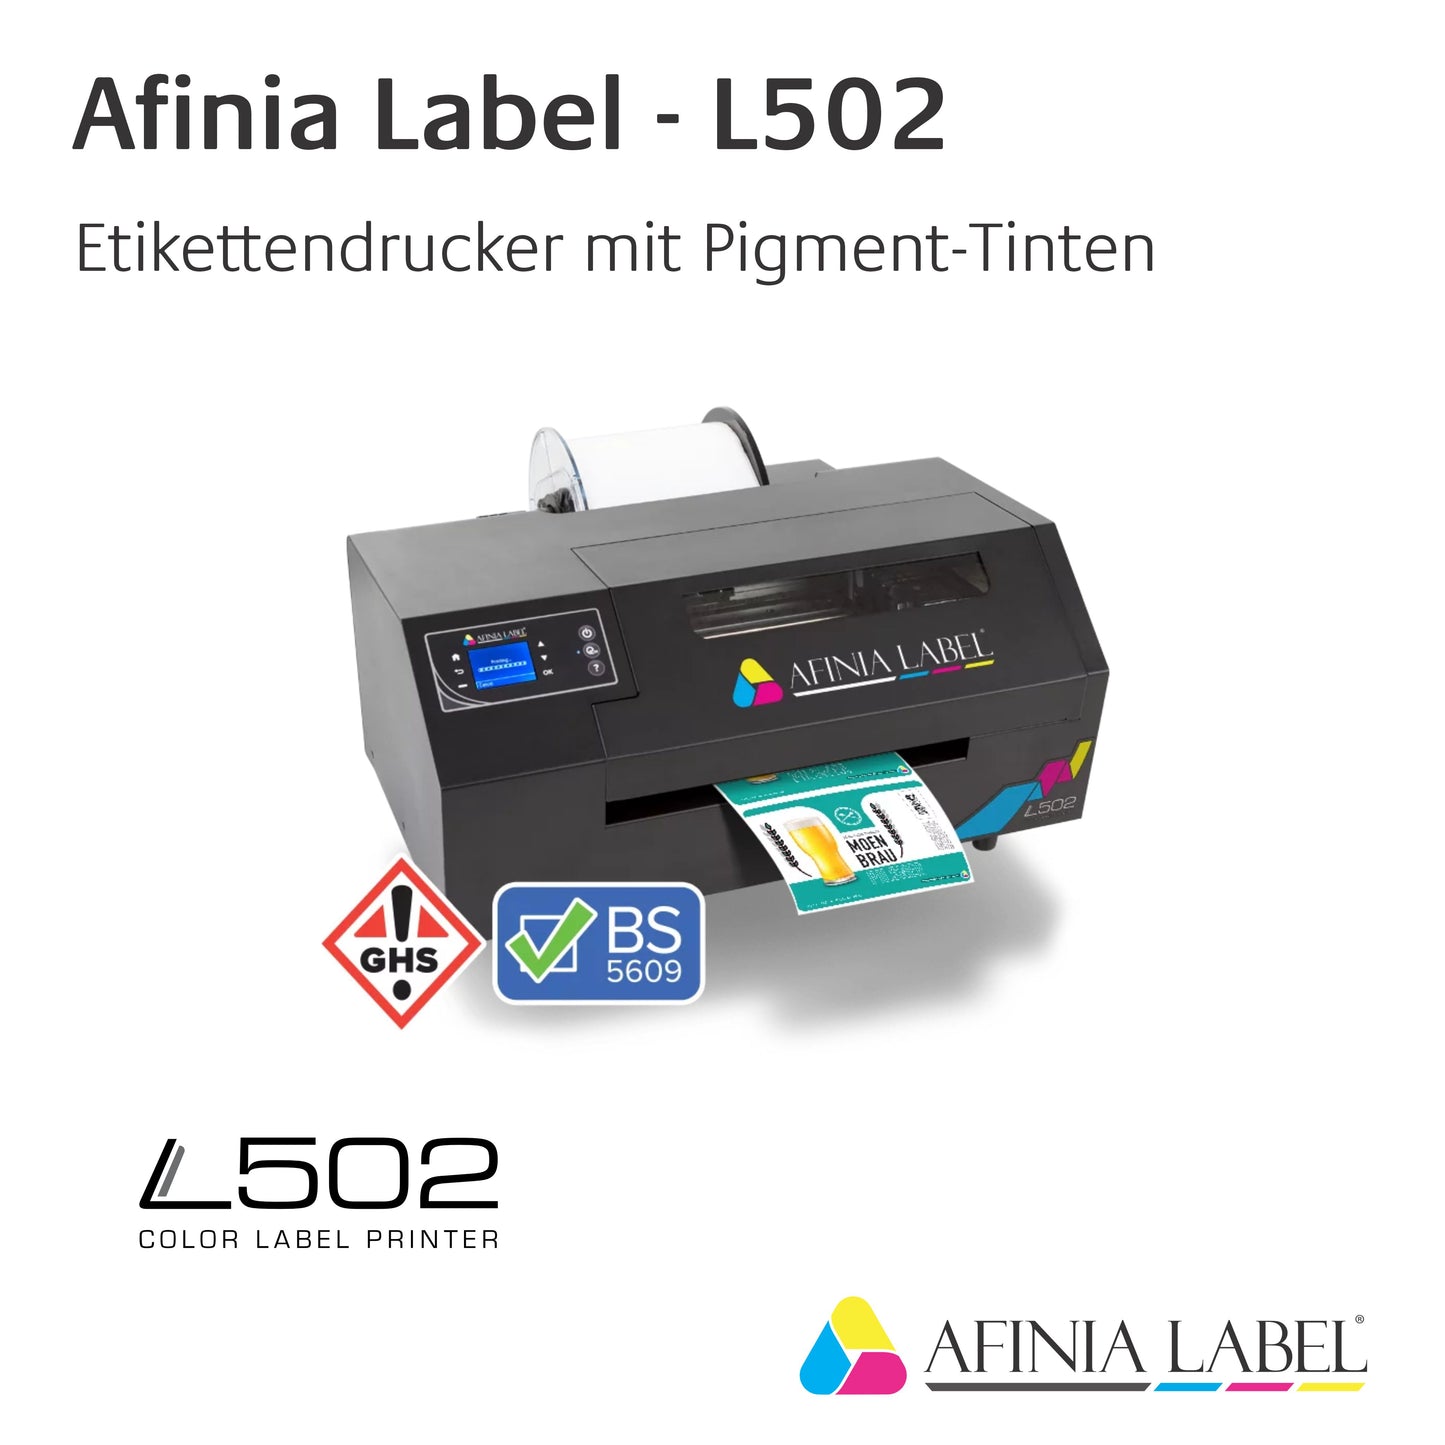 Afinia Label - L502 Farbetiketten-Drucker mit Pigment-Tinten